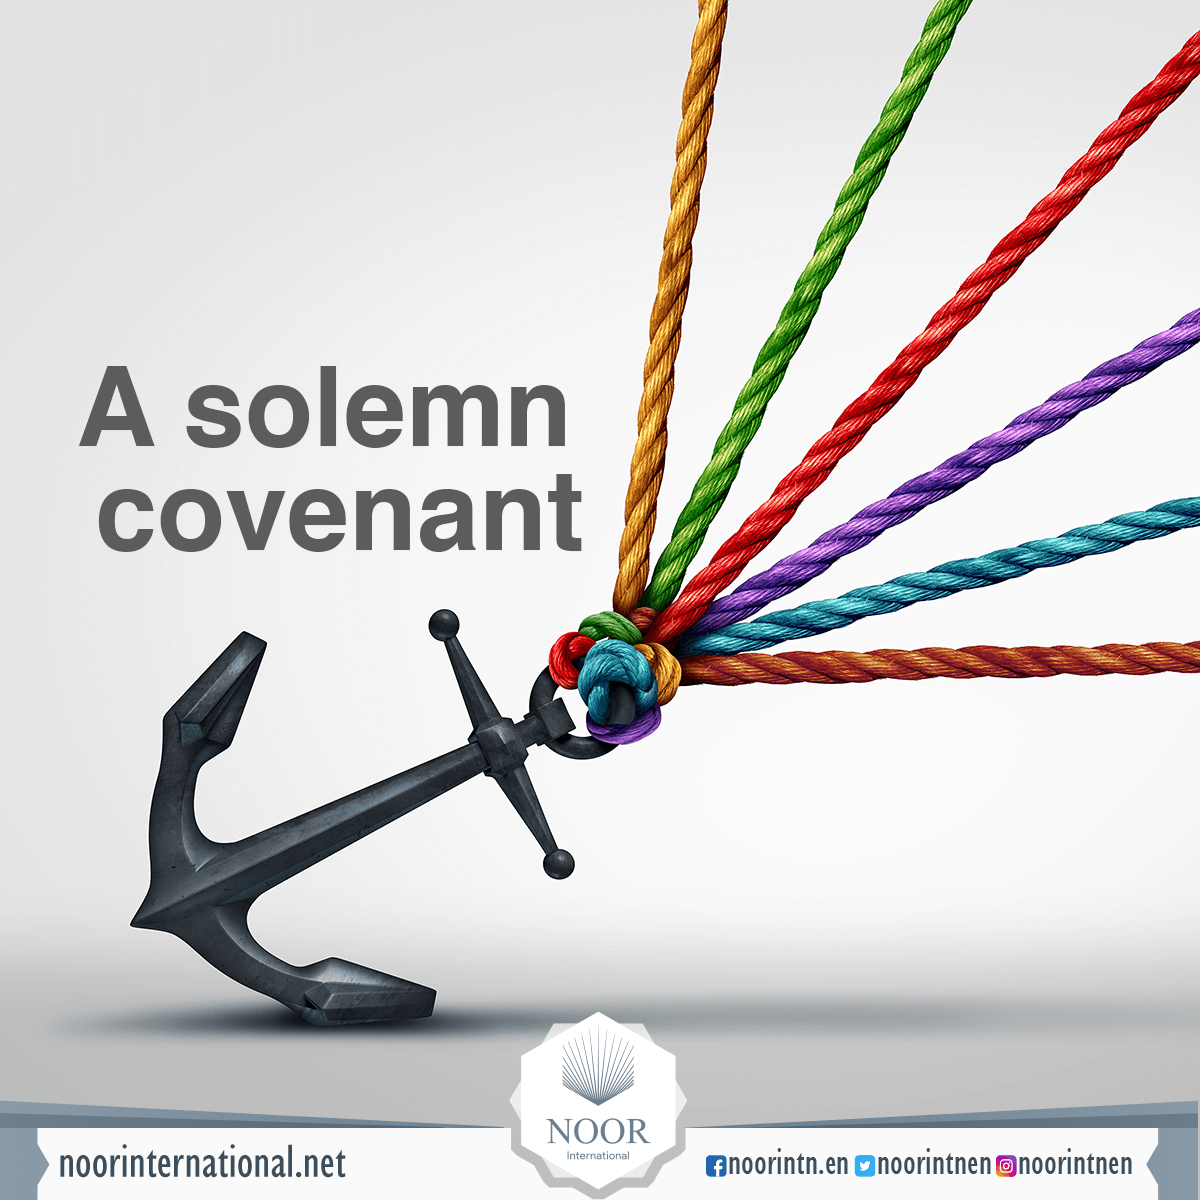 A solemn covenant